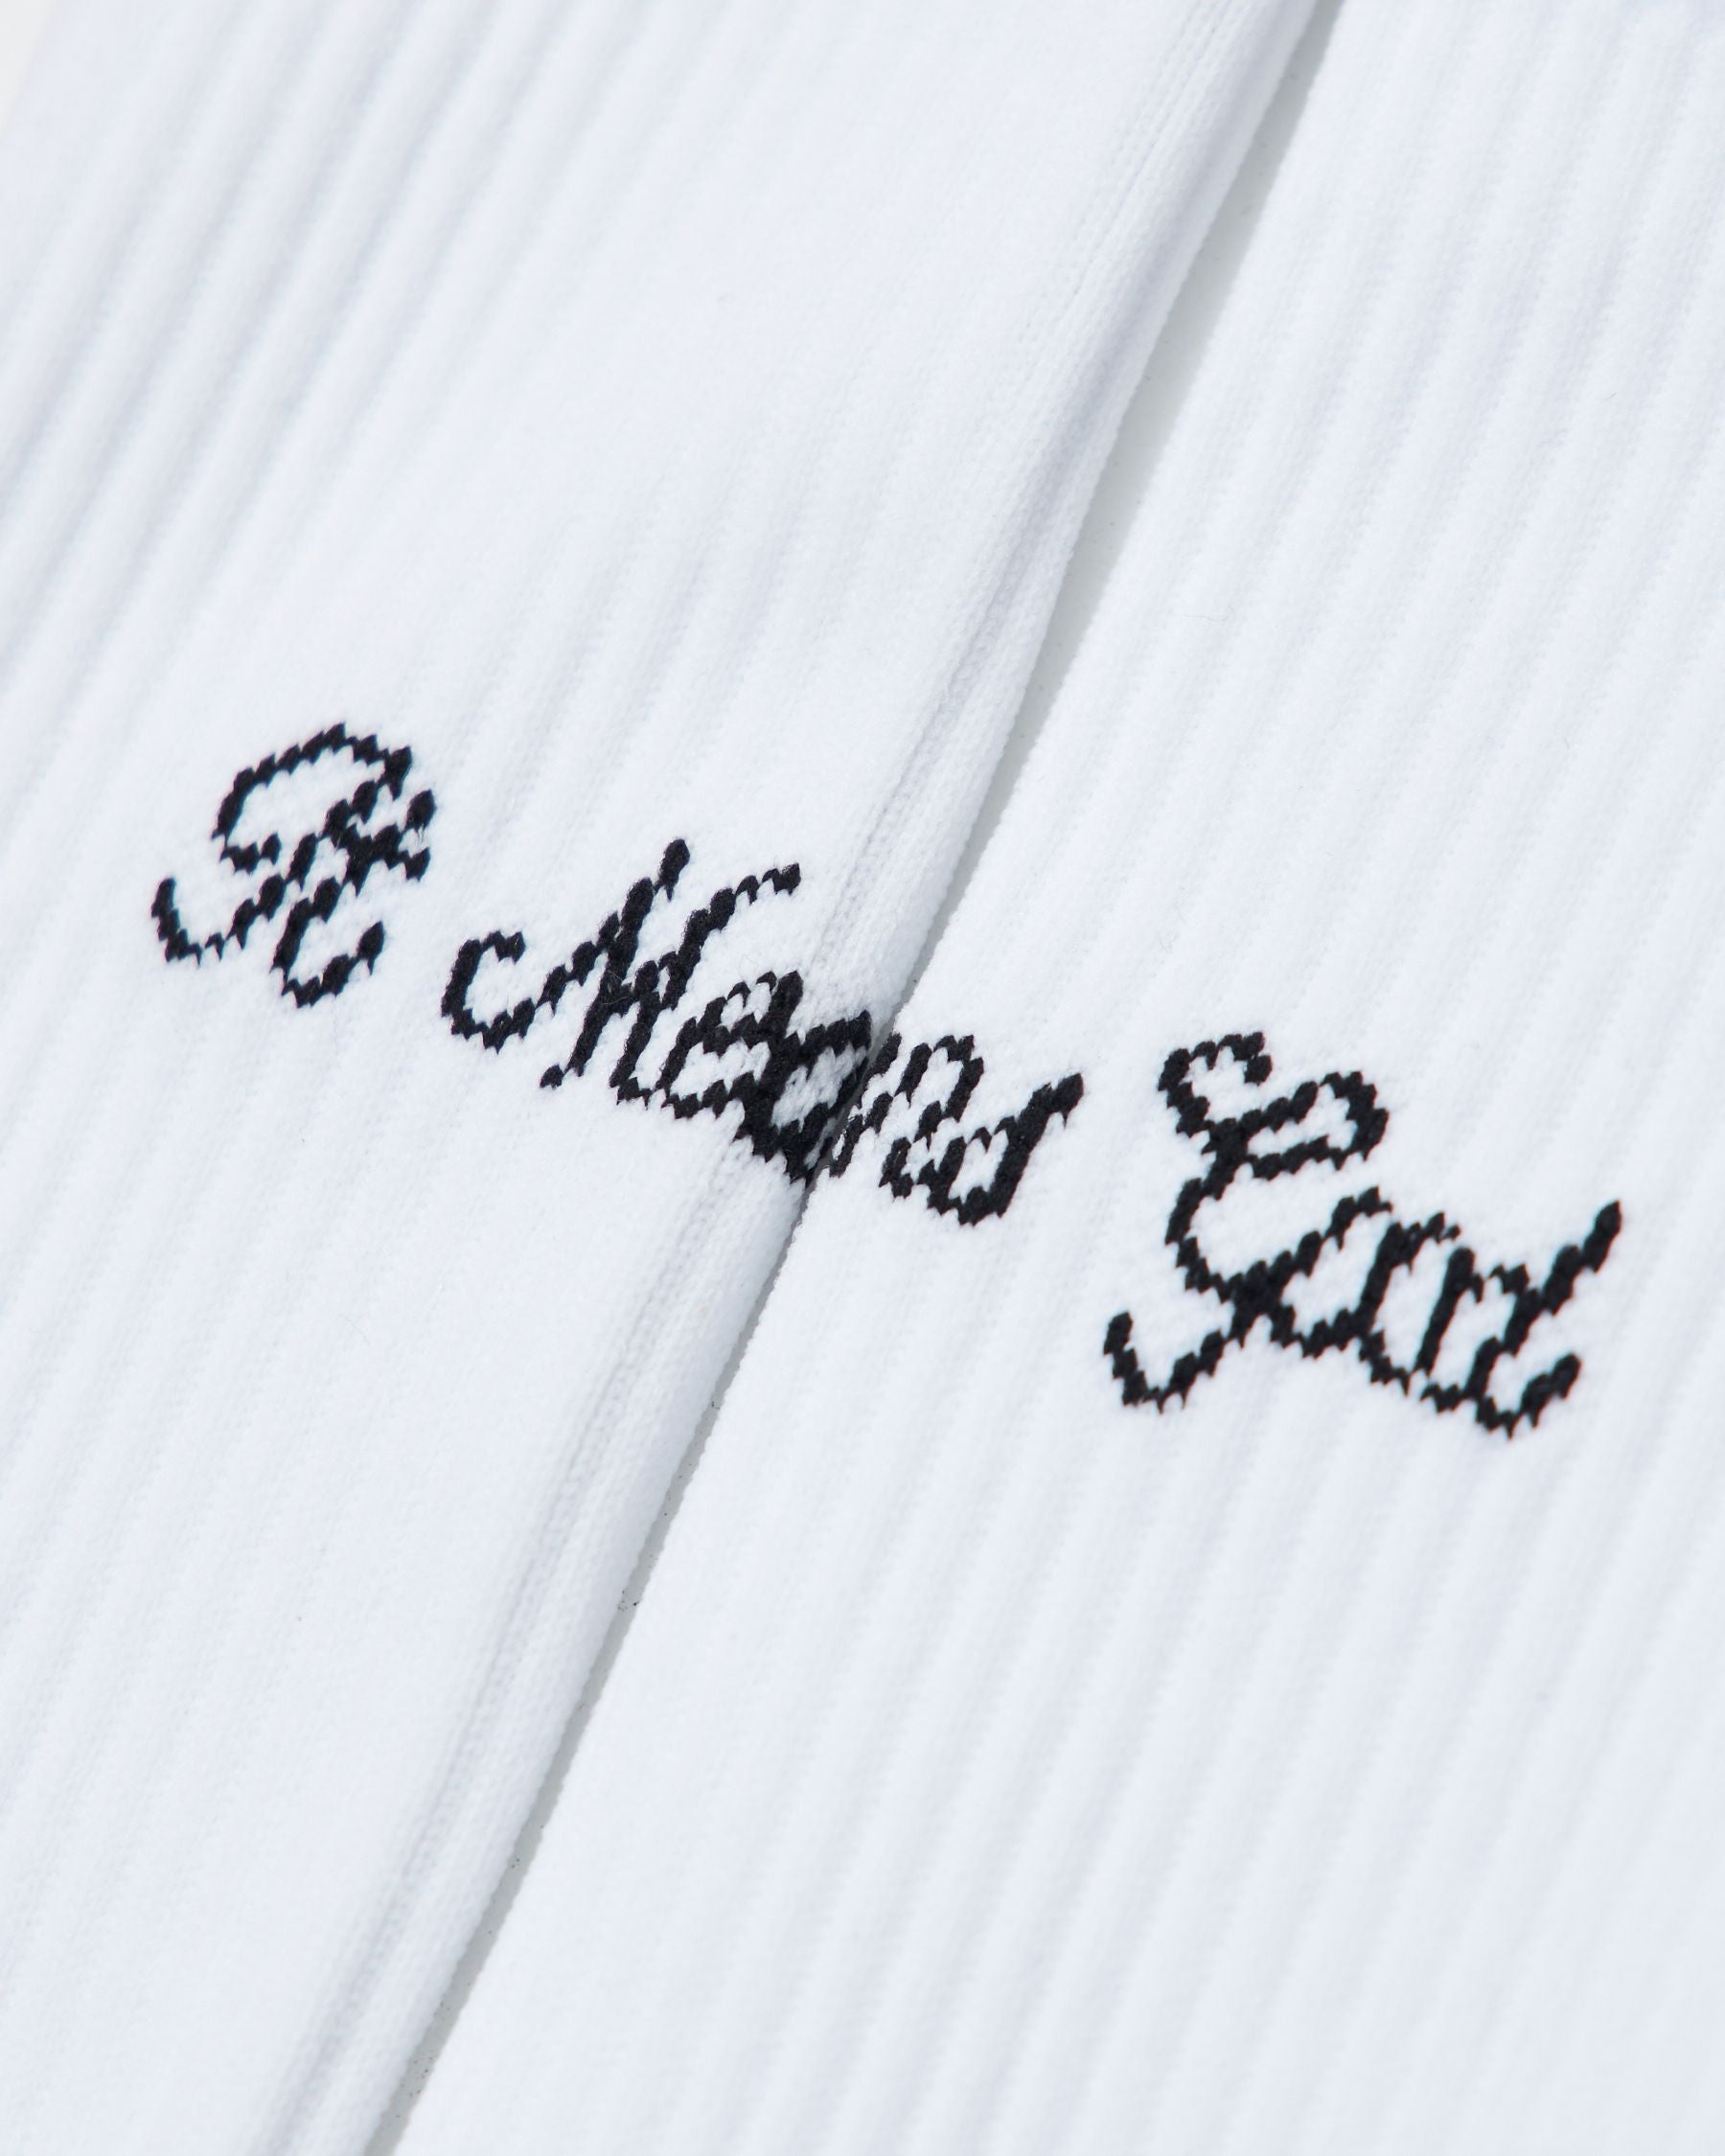 It Means Good Script Logo Socks in White